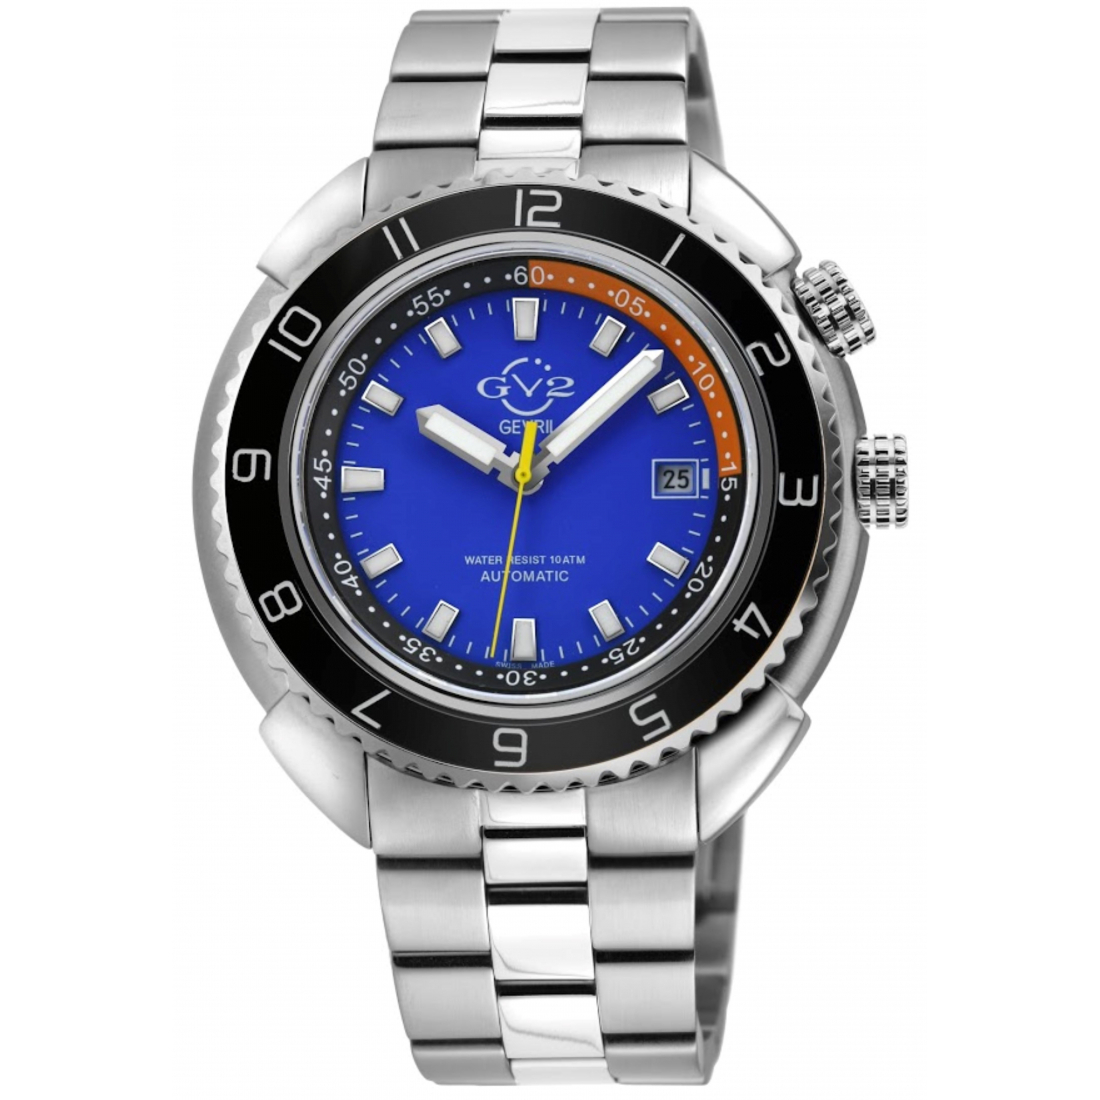 Gv2 Squalo Men's Swiss Automatic Blue Dial Stainless Steel Bracelet Date Watch